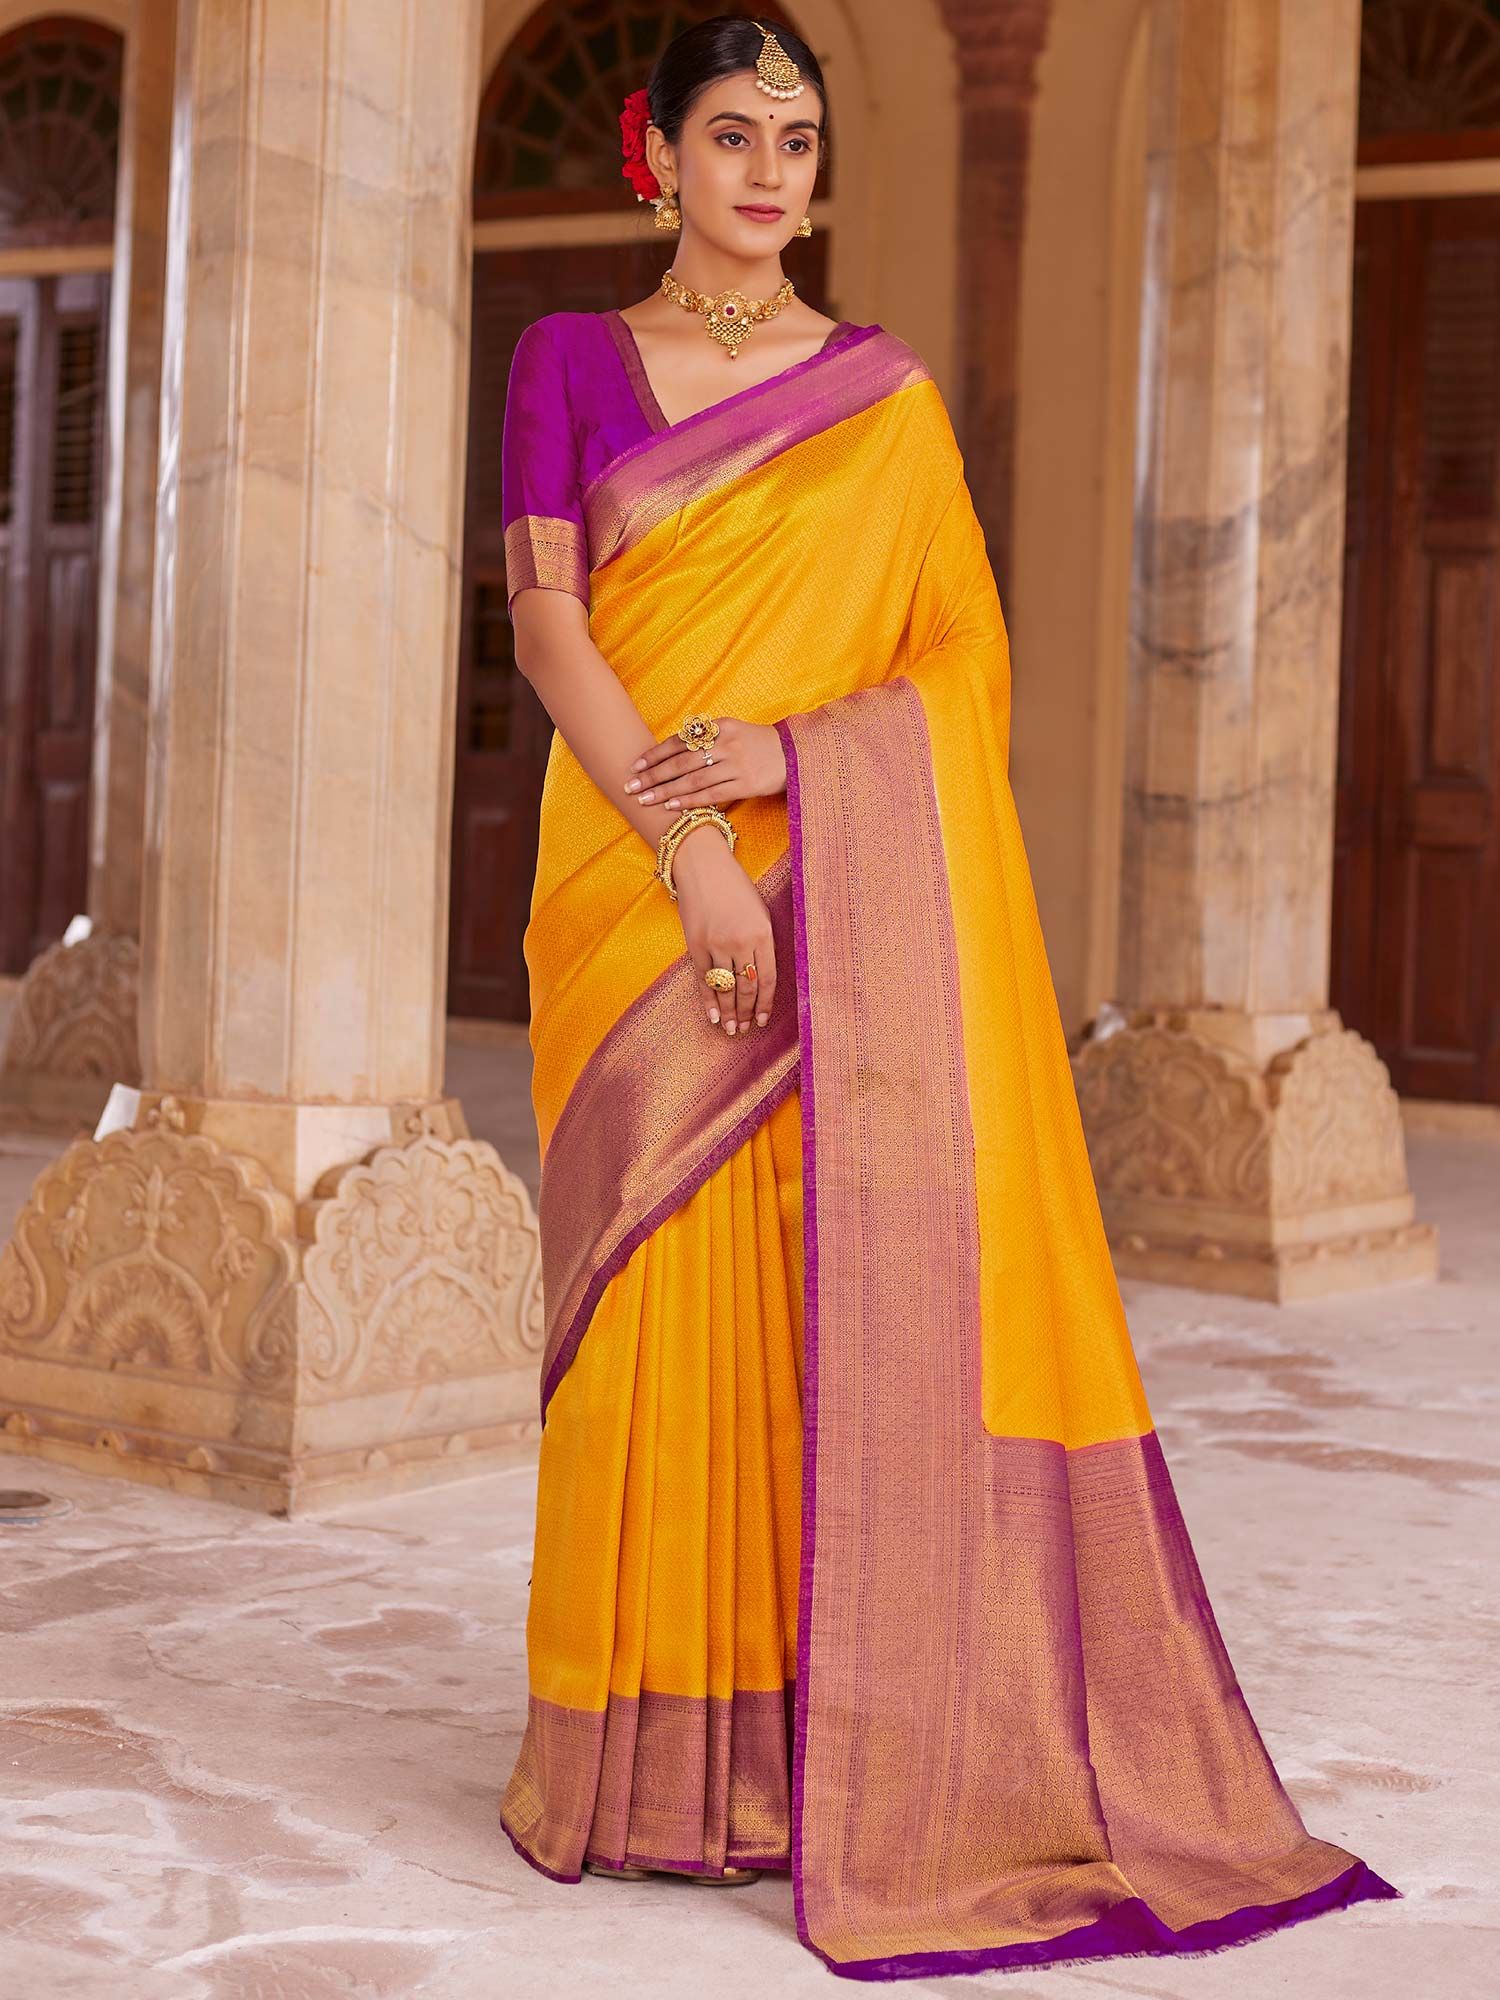 Mustard yellow chiffon saree with hand worked purple Blouse – Threads